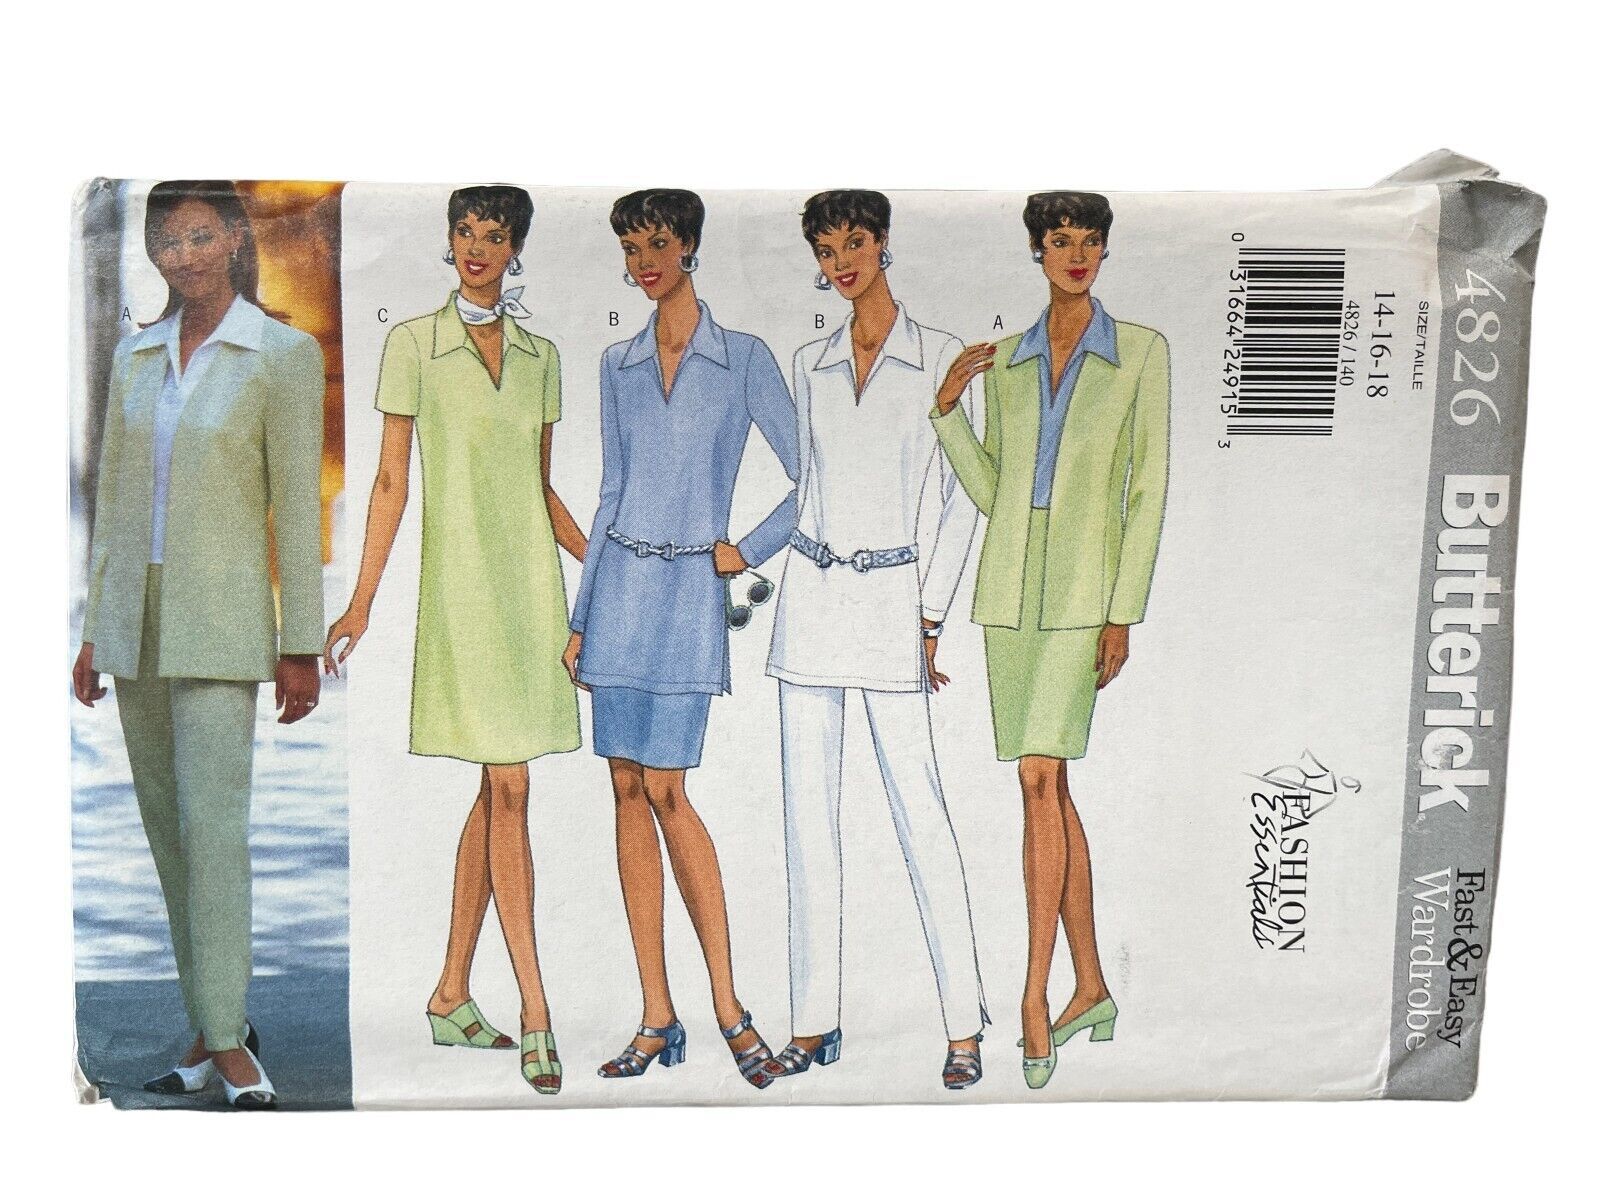 Butterick Sewing Pattern 4826 Pants Jacket Dress Top Skirt Misses Size 14-18 - $9.74